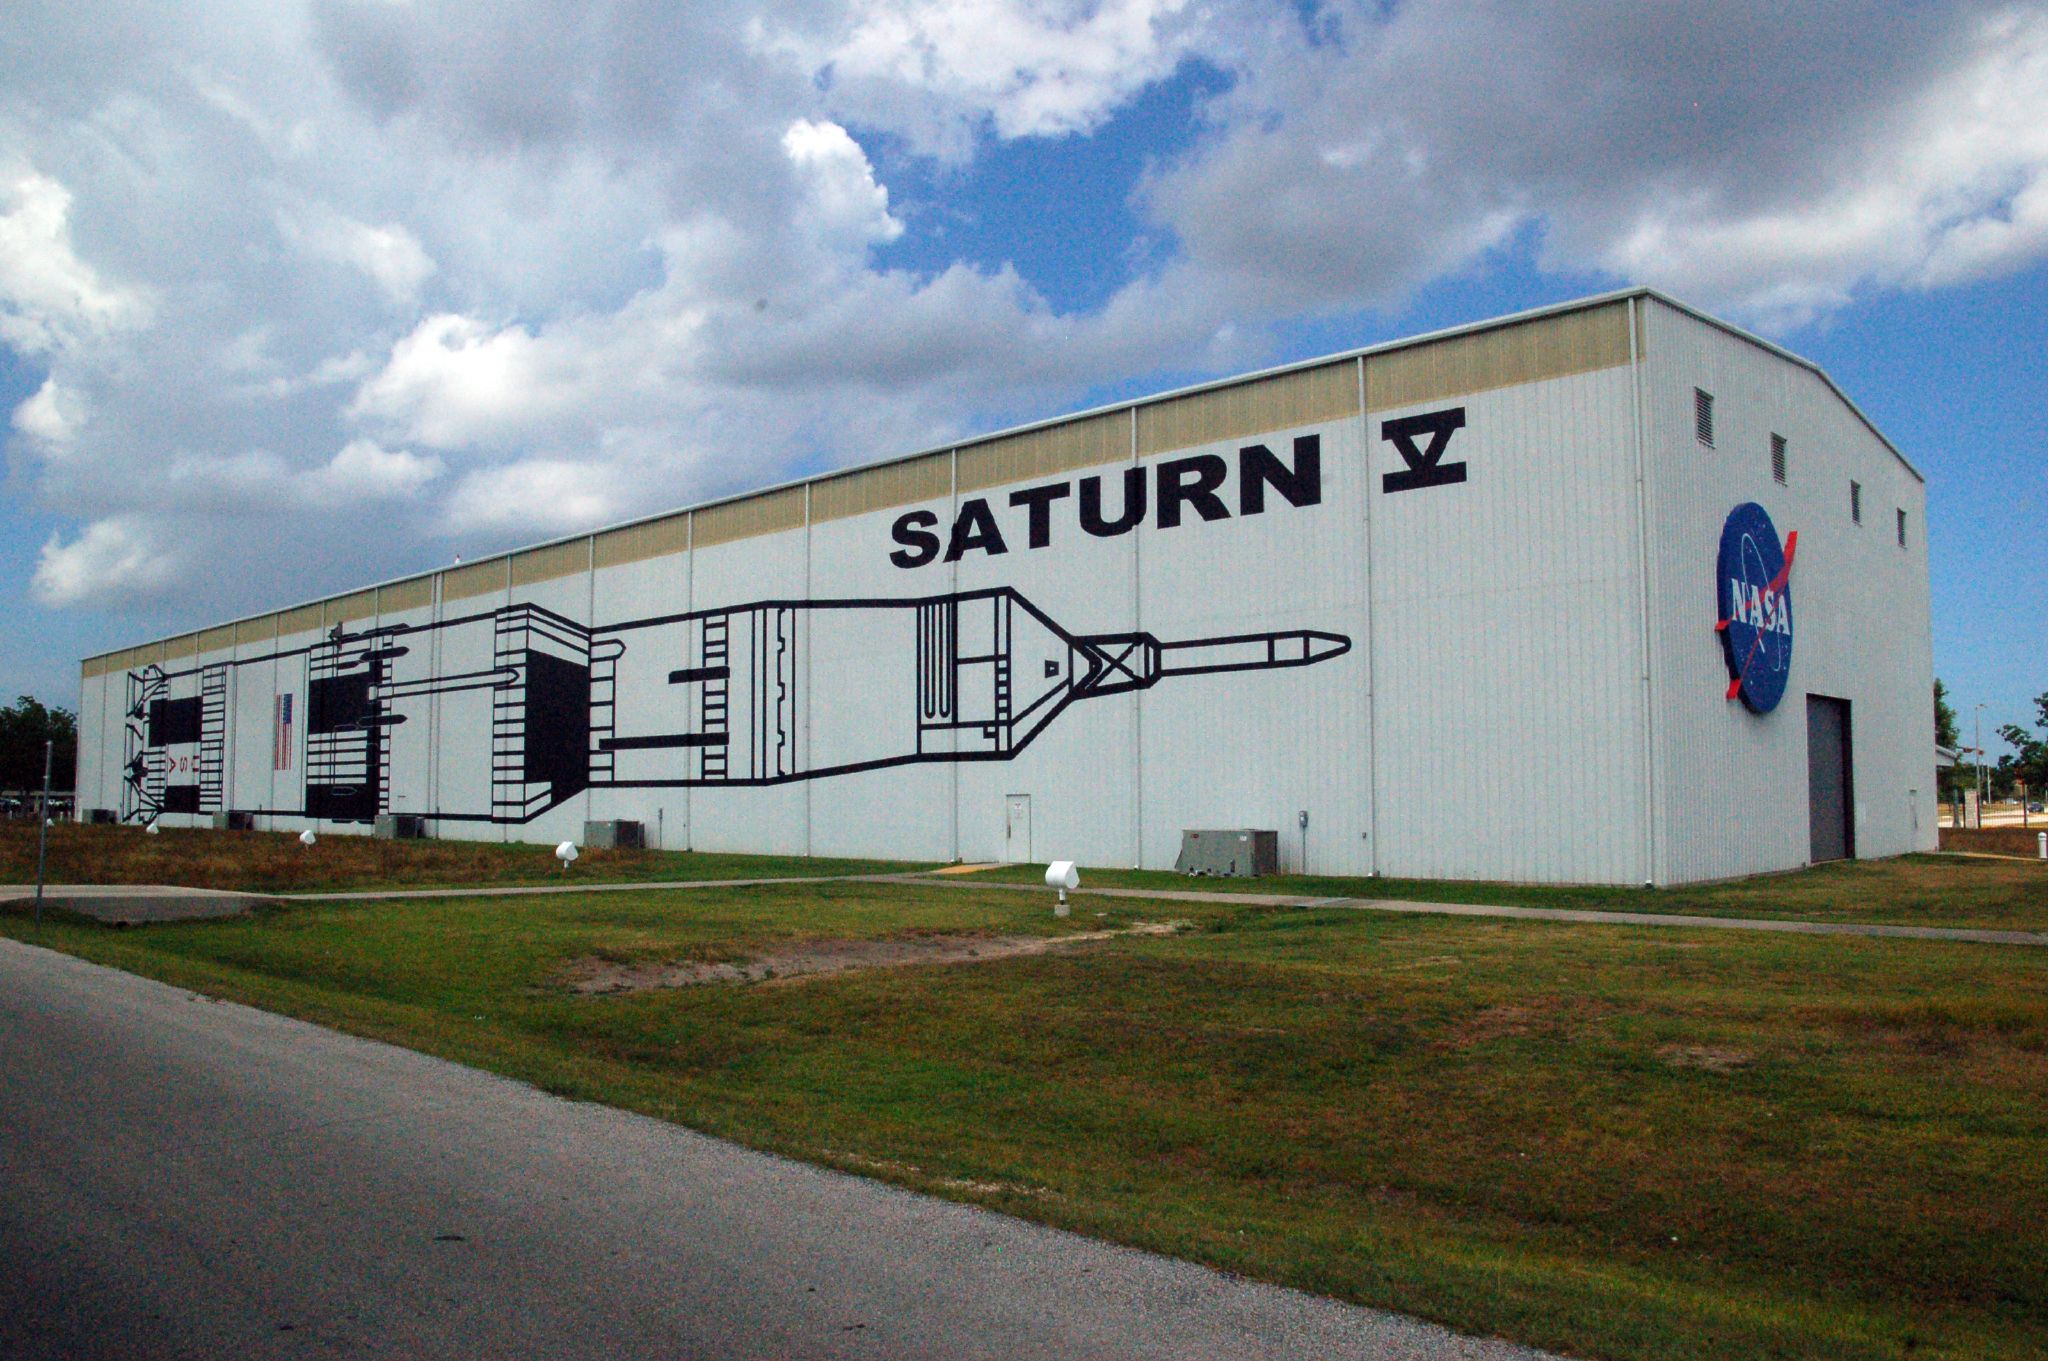 Saturn V building Johnson Space Center